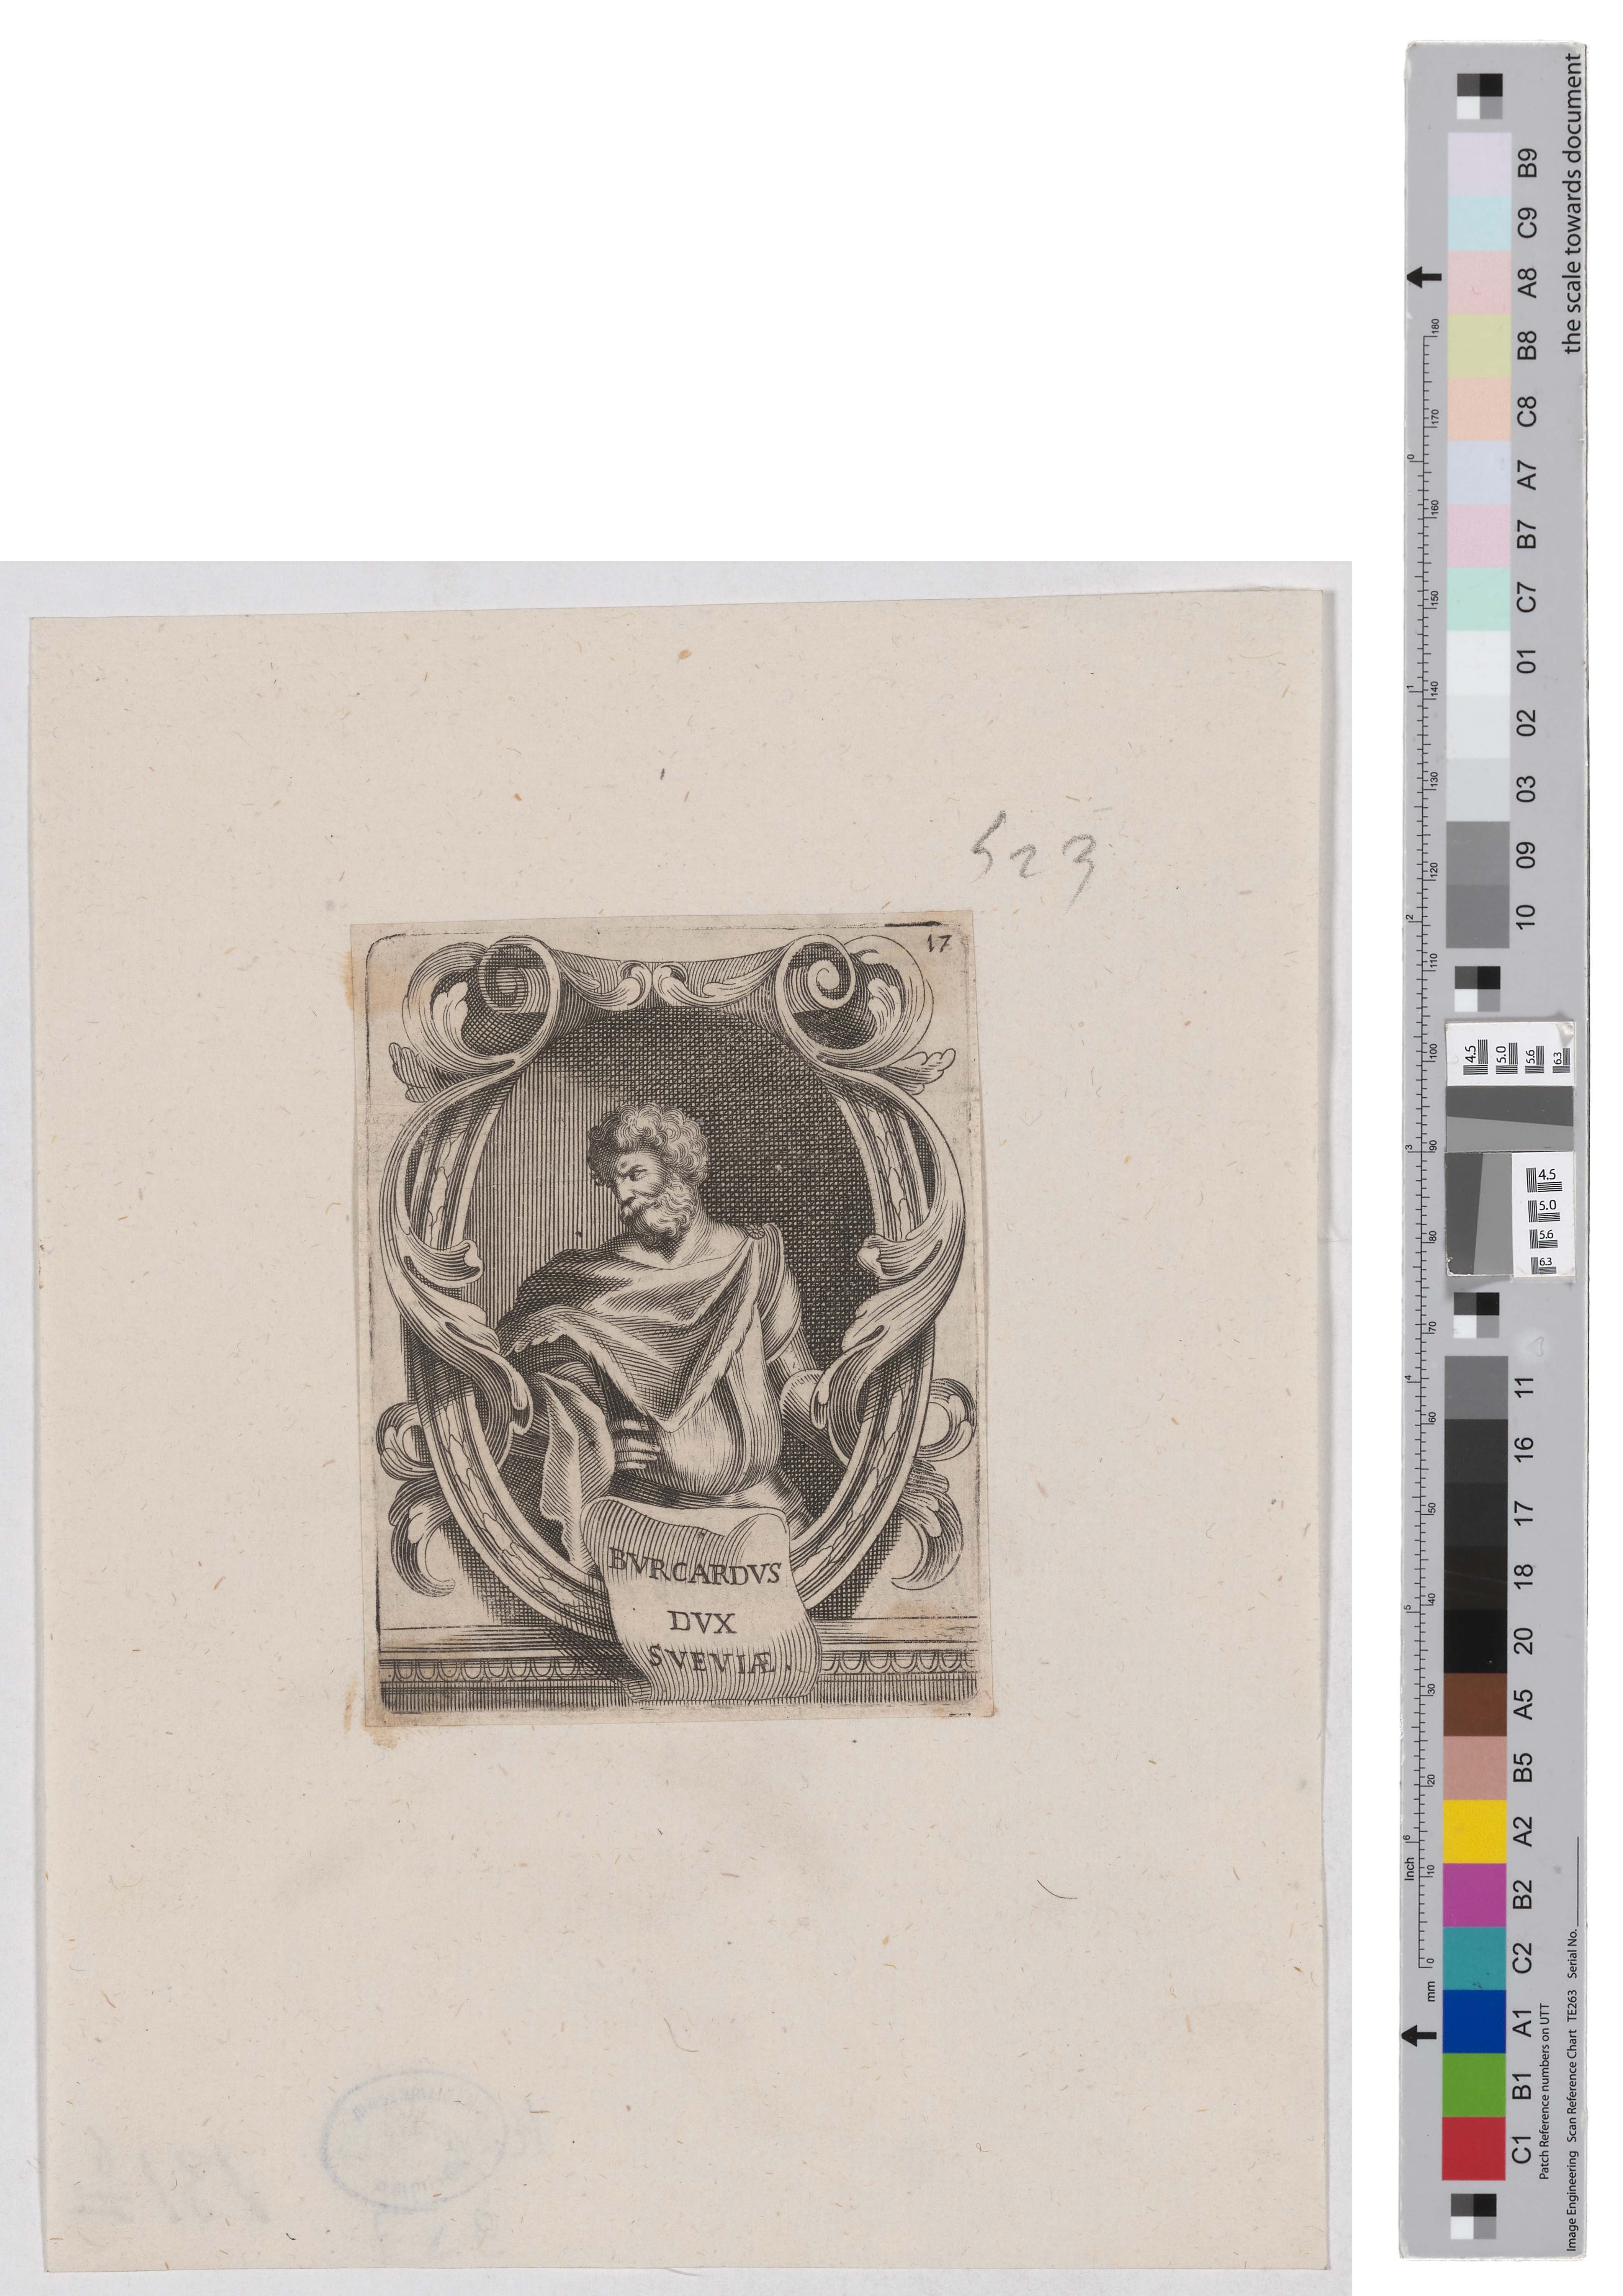 Druckgrafik „BURCARDUS | DUX | SVEVIAE“ (Kreismuseum Grimma RR-F)